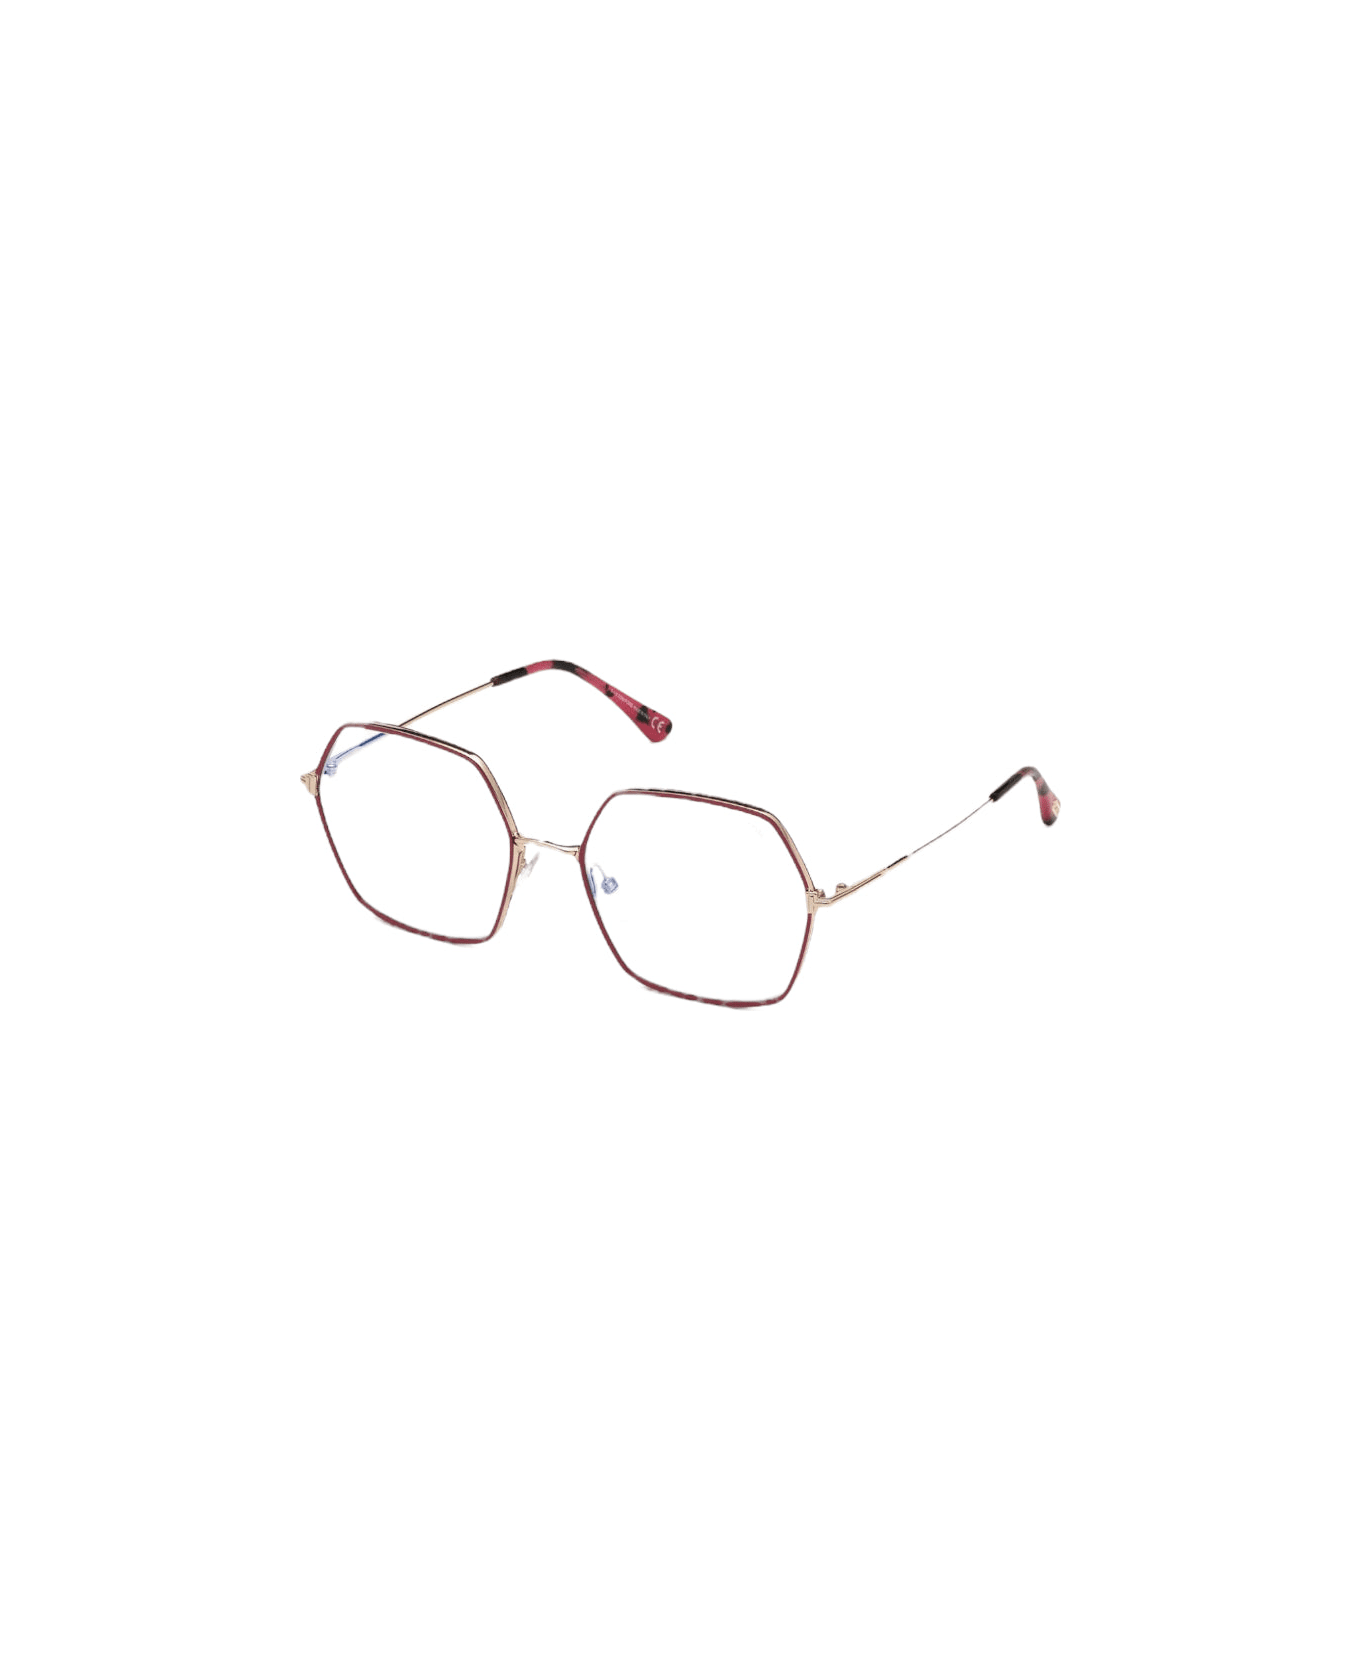 Tom Ford Eyewear Ft 5615 - Gold & Pink Glasses